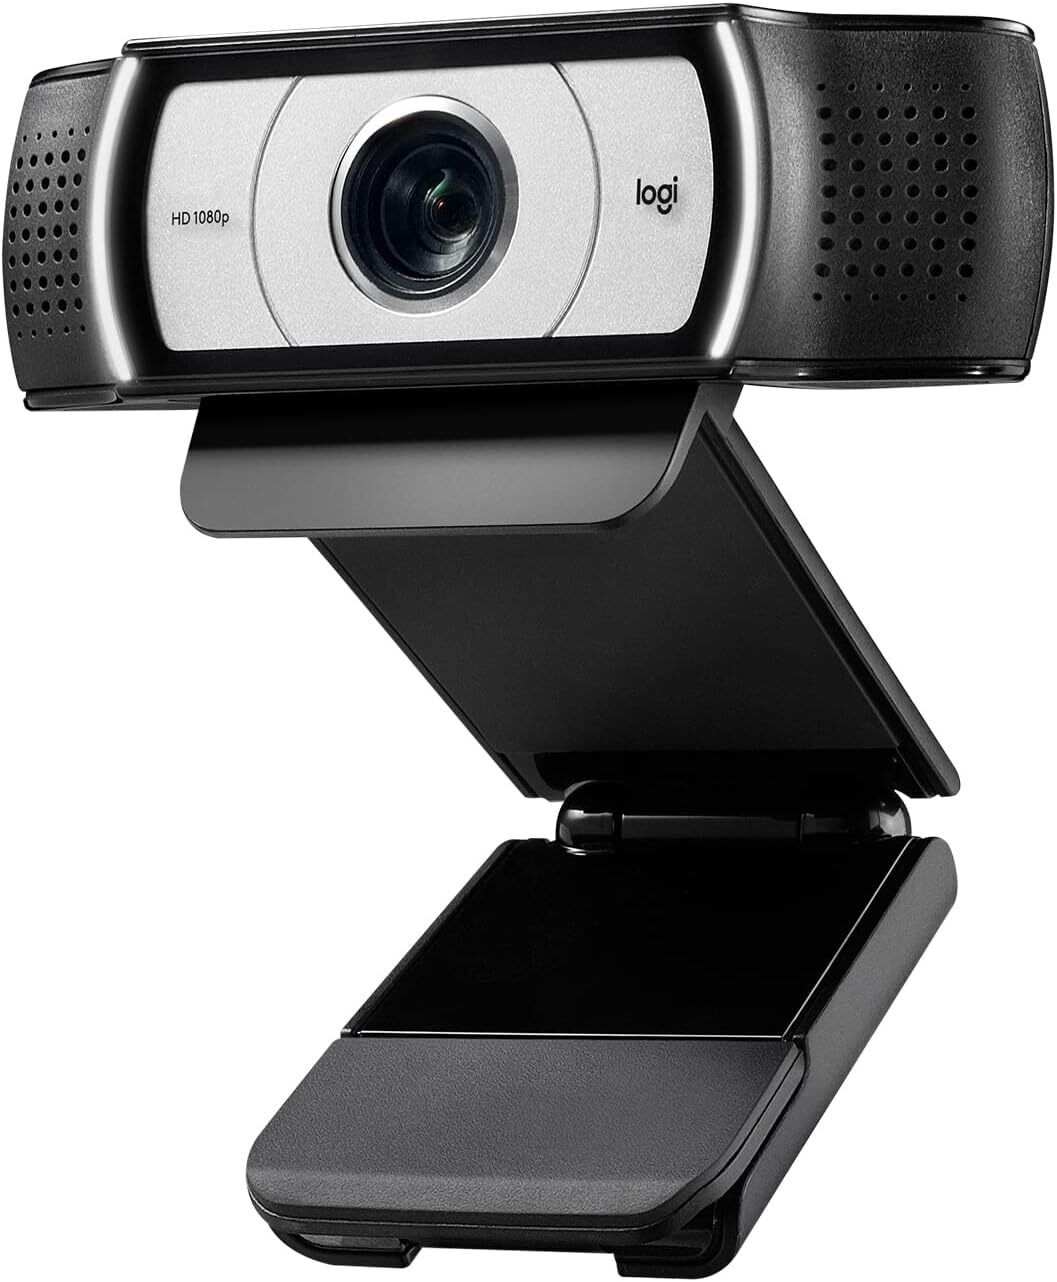 Logitech C930e Webcam for Business Full HD 1080p Video Quality at 30 fps - Black